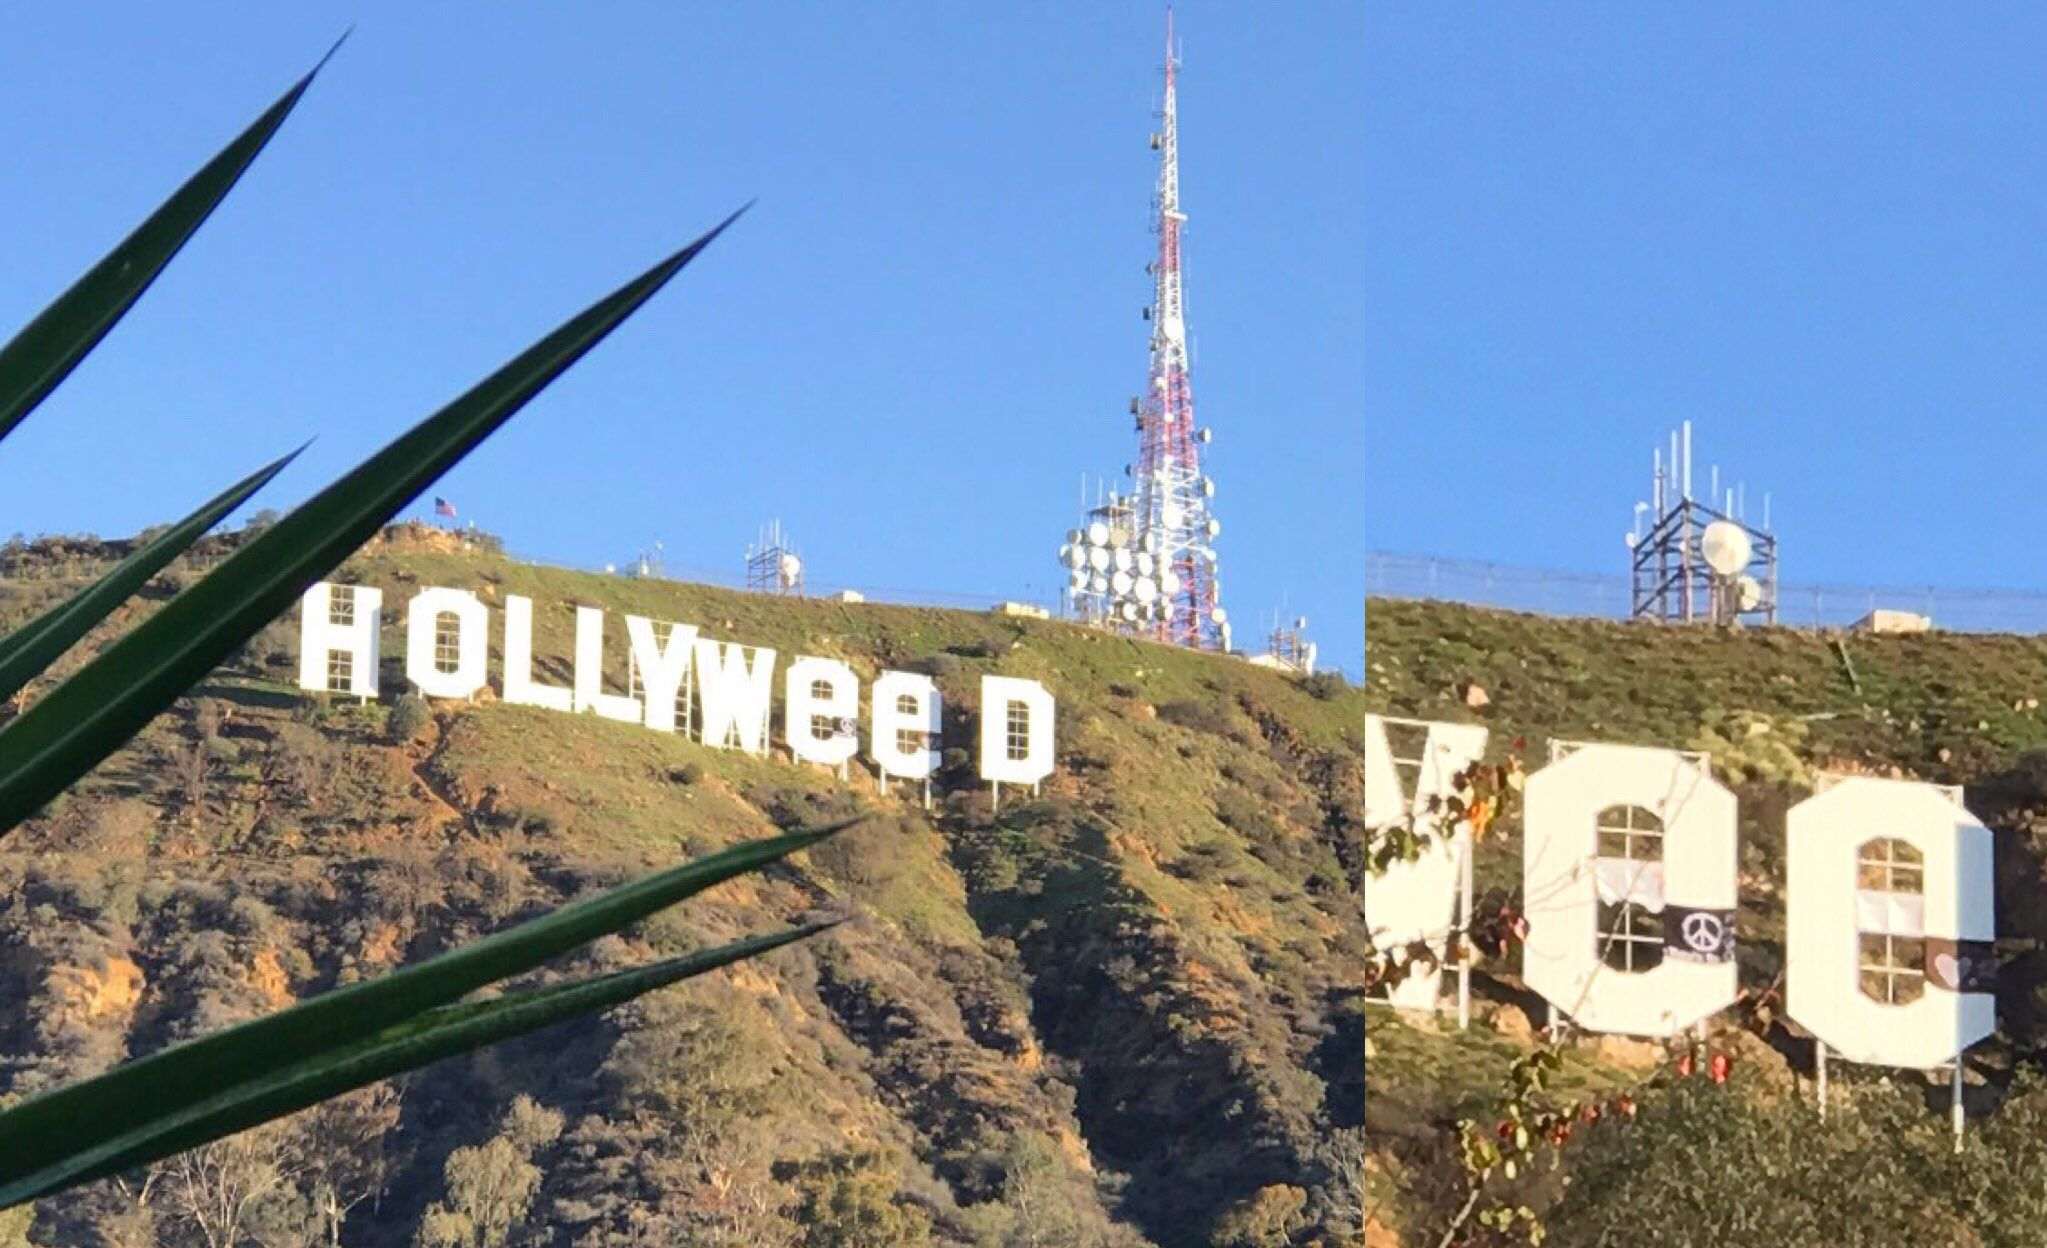 El cartell de "Hollywood" ara és "Hollyweed" (beneïda Marihuana)